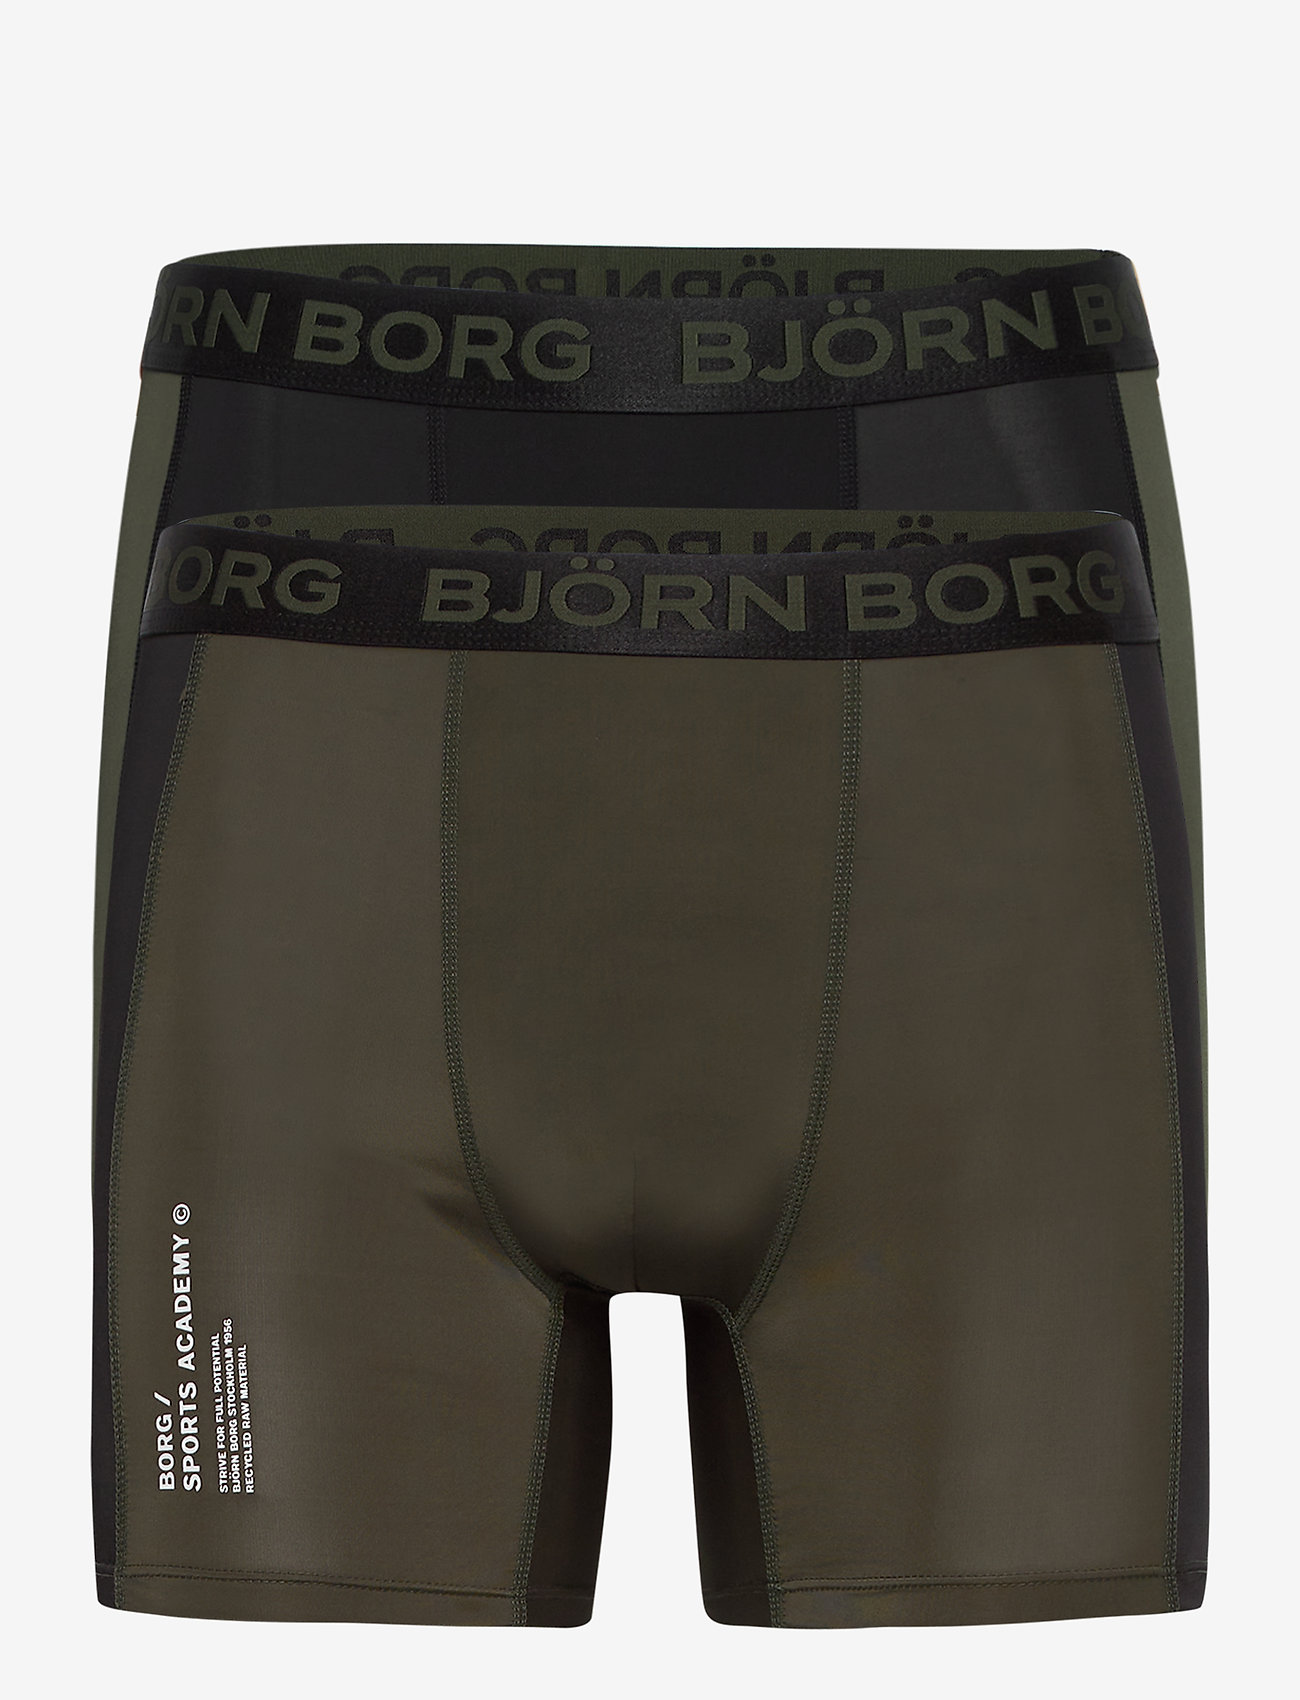 Björn Borg - SHORTS PER BORG SPORTS ACADEMY - black beauty - 0